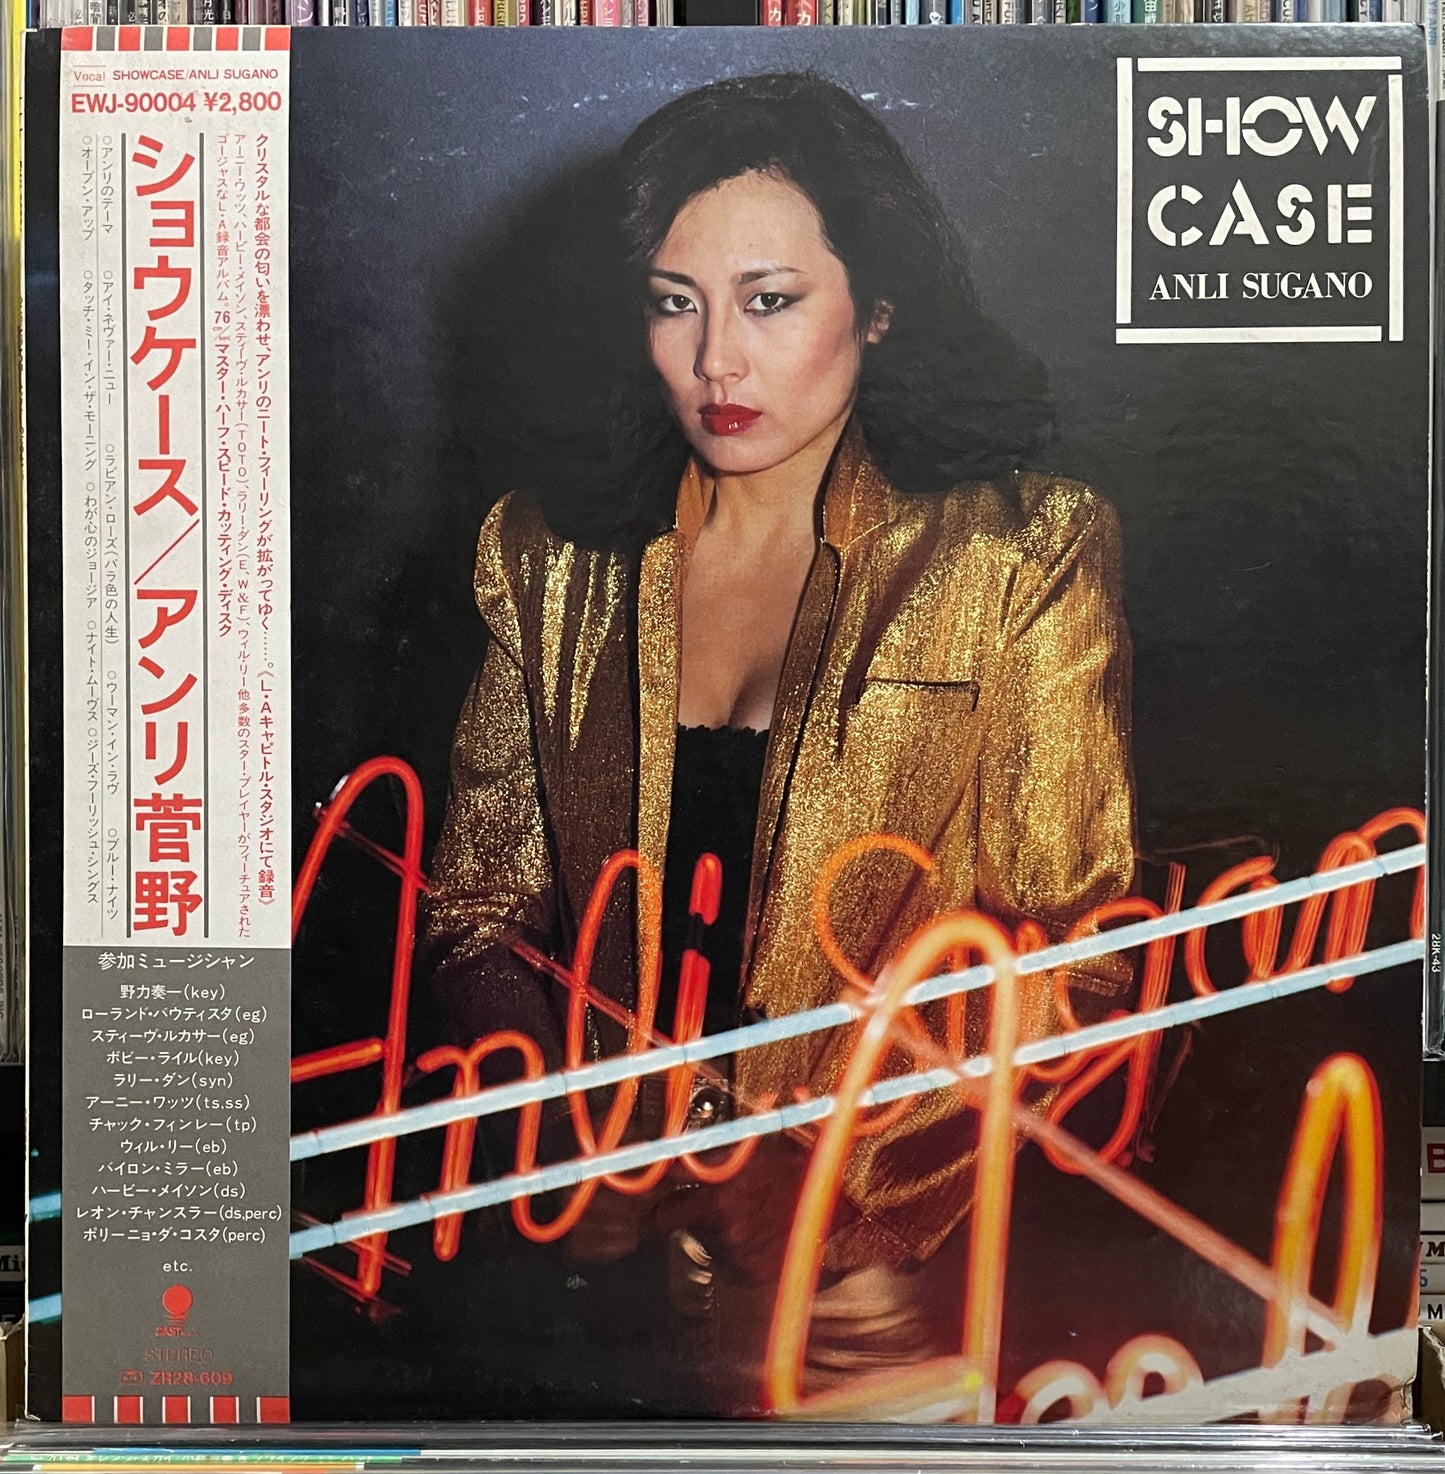 Anli Sugano “Showcase” (1981)